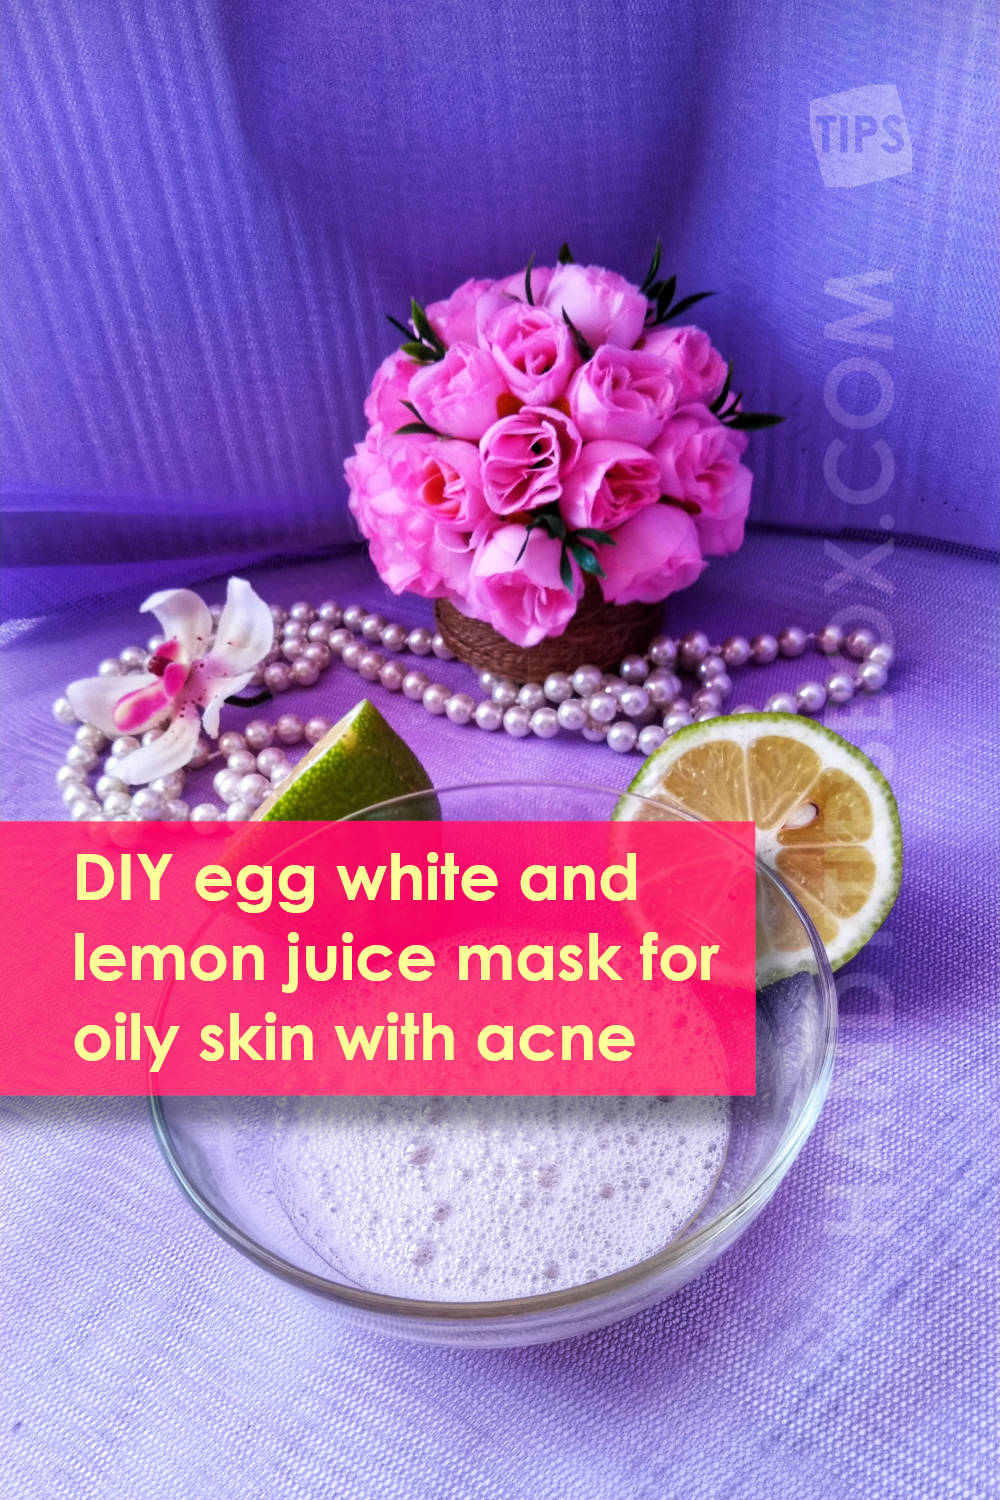 Homemade egg white and lemon juice face mask for acne-prone oily skin, vertical image